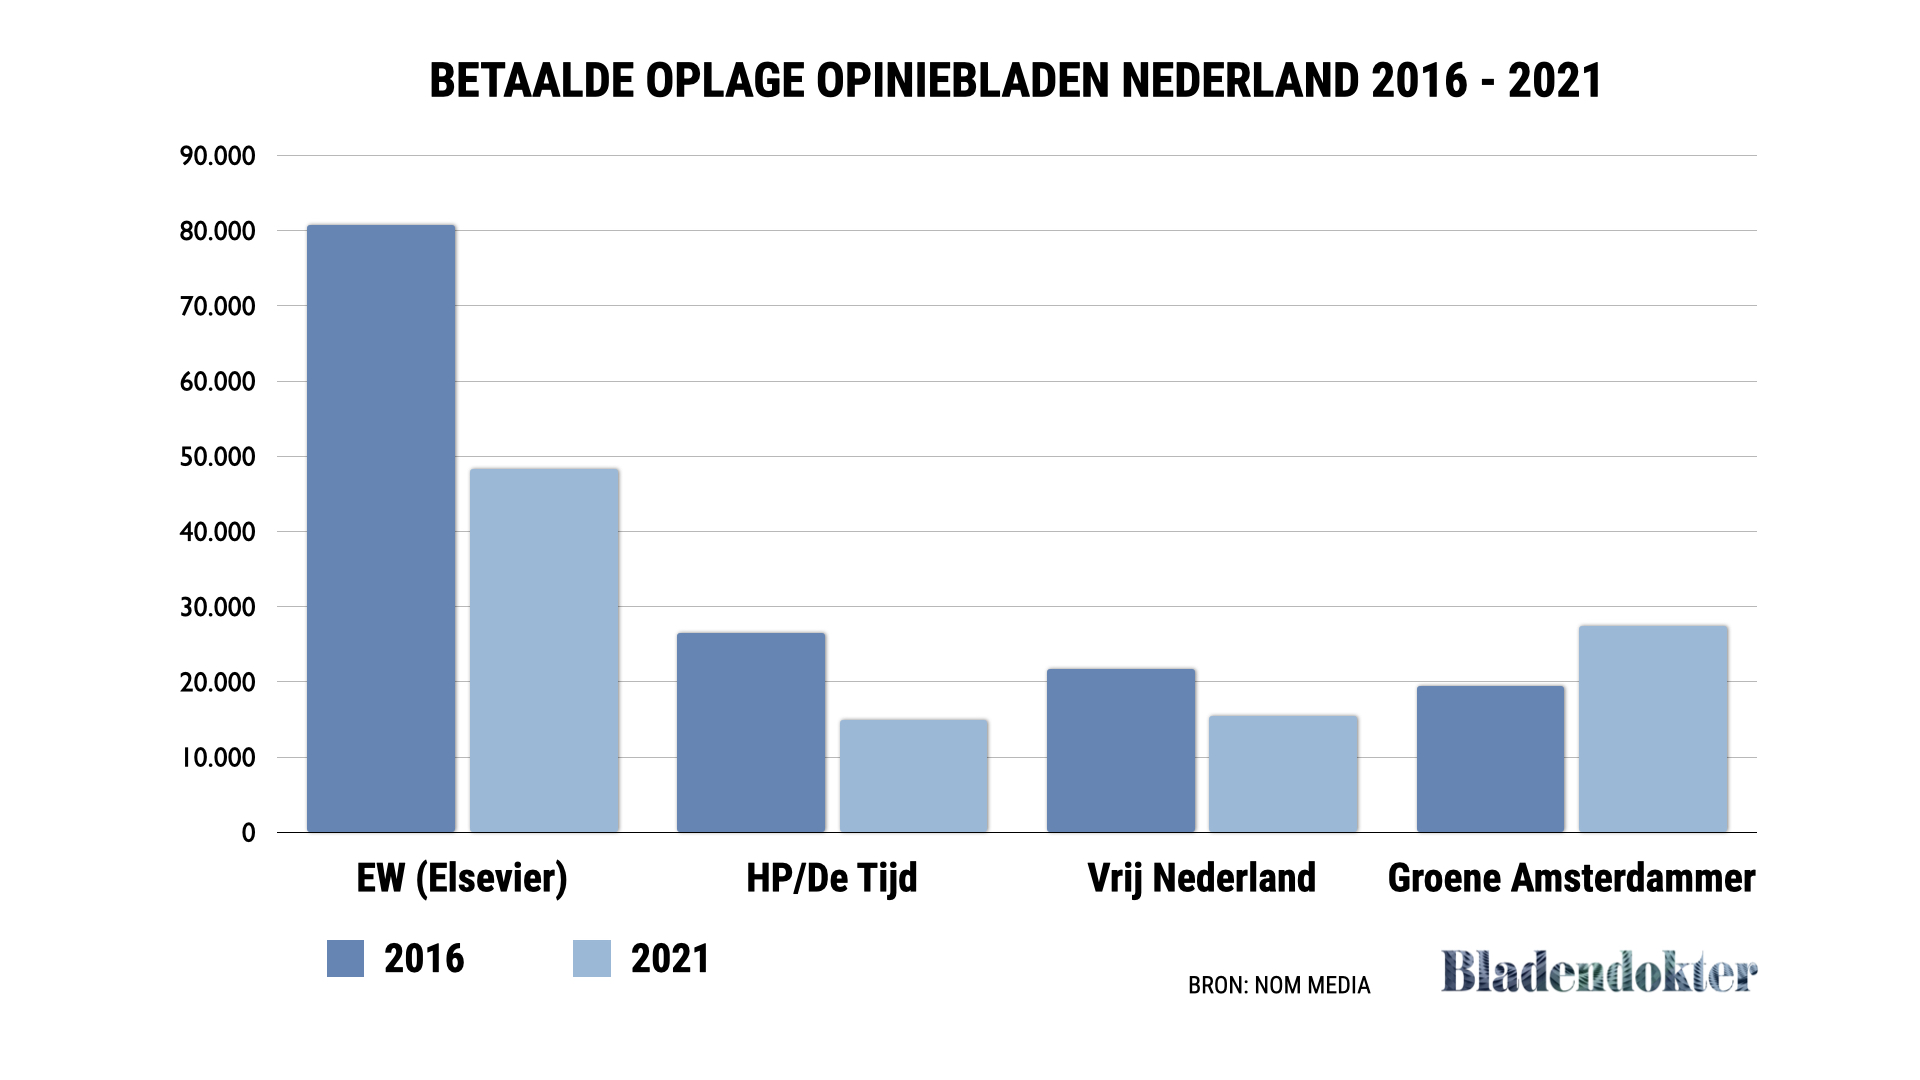 Oplage daling opiniebladen Nederland tussen 2016 en 2021